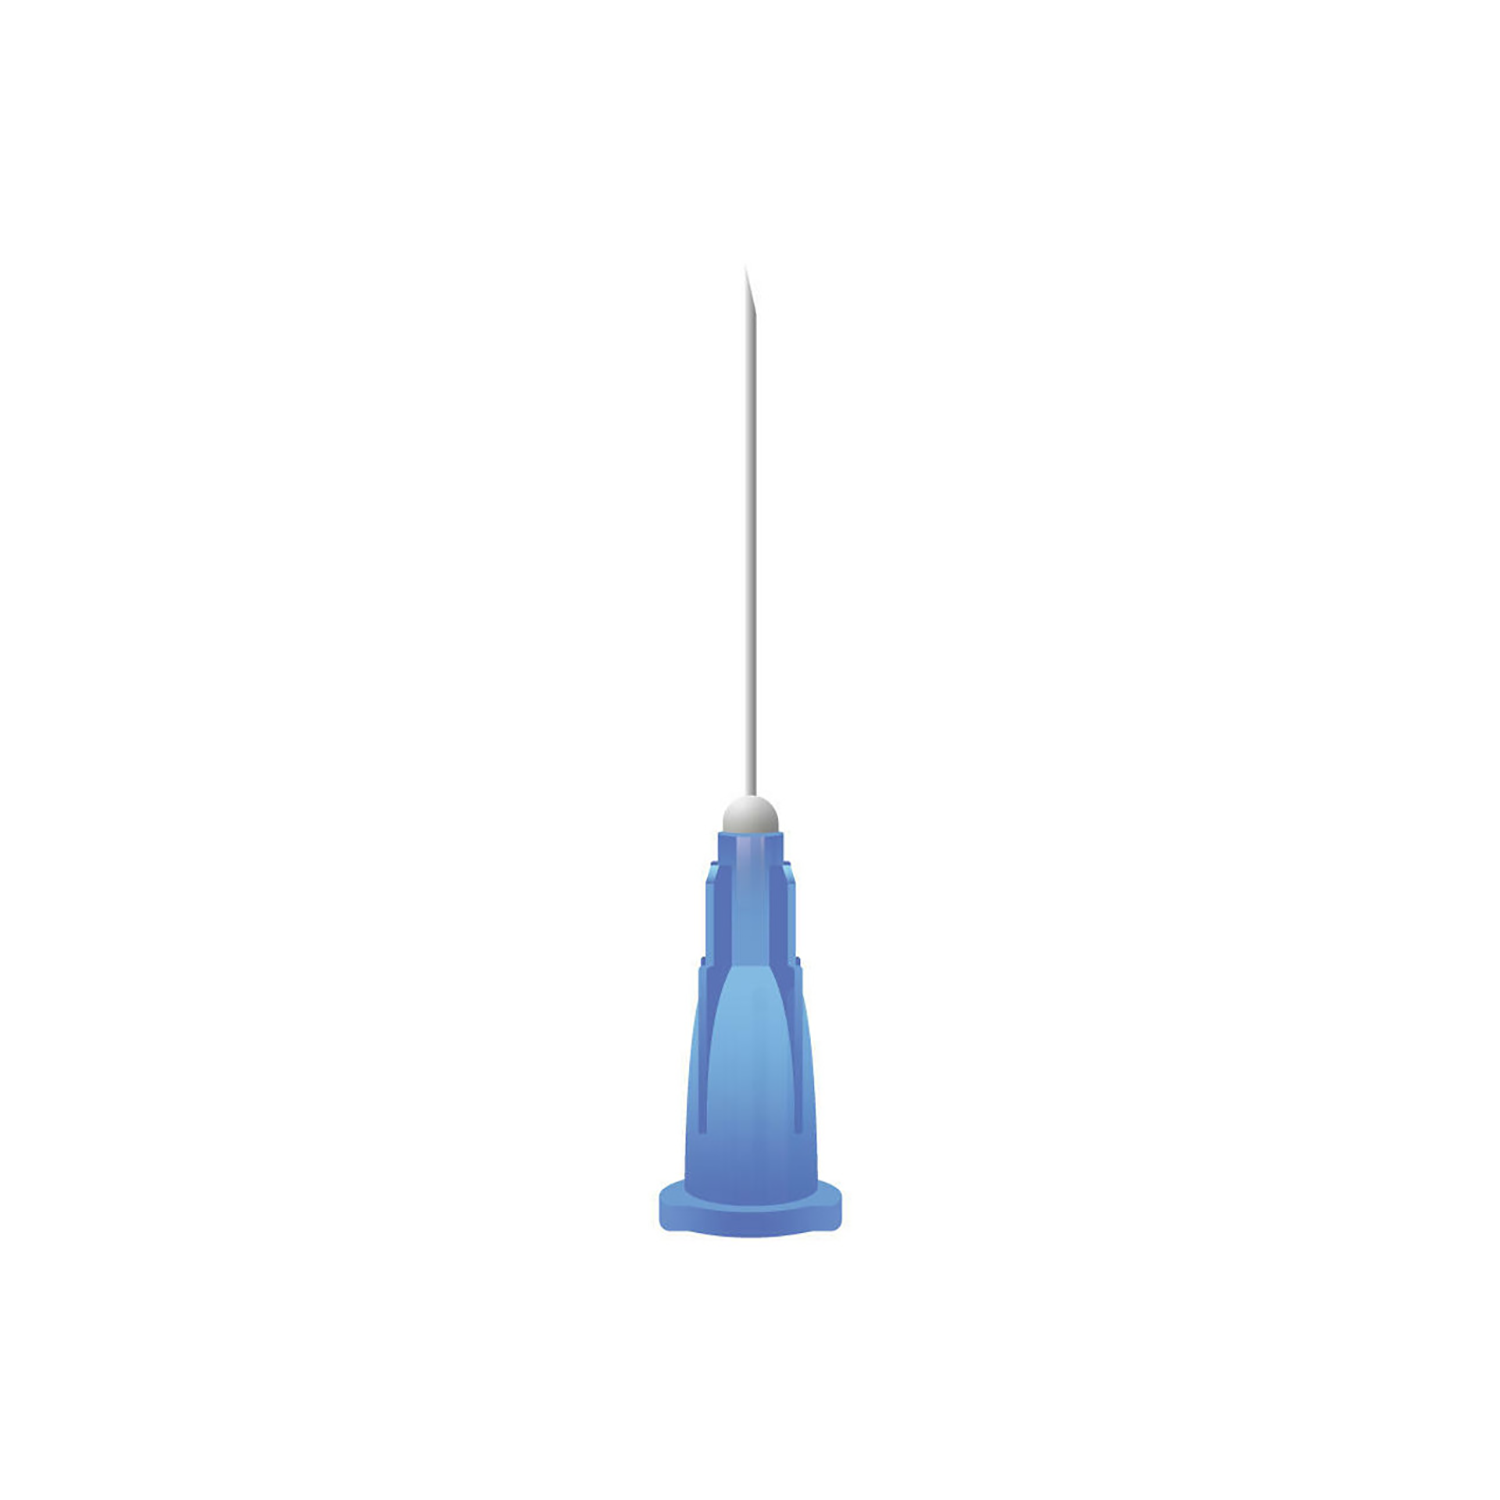 Terumo Agani Hypodermic Needle | Blue 23G x 1" | Pack of 100 (1)